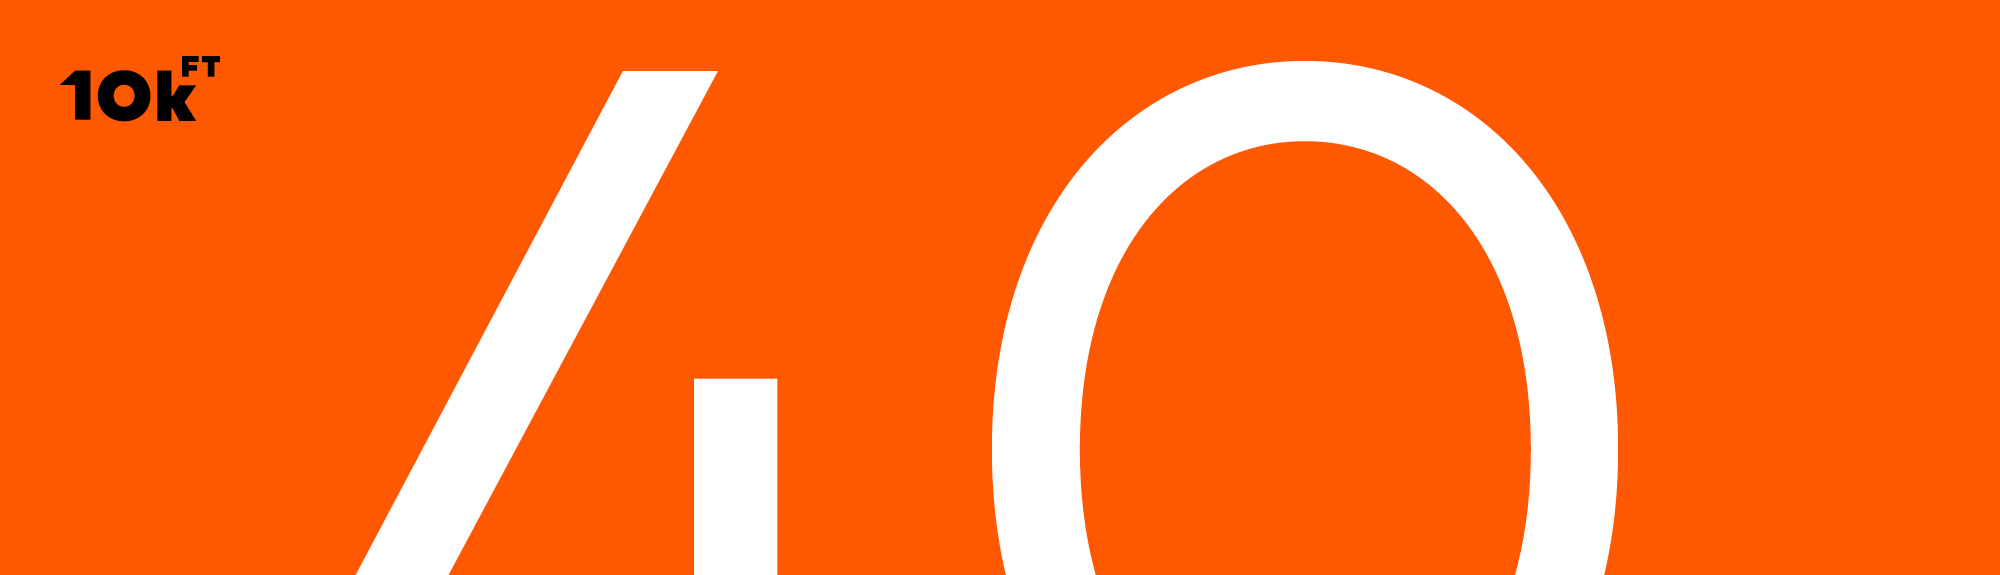 Orange image with center text reading “40”.